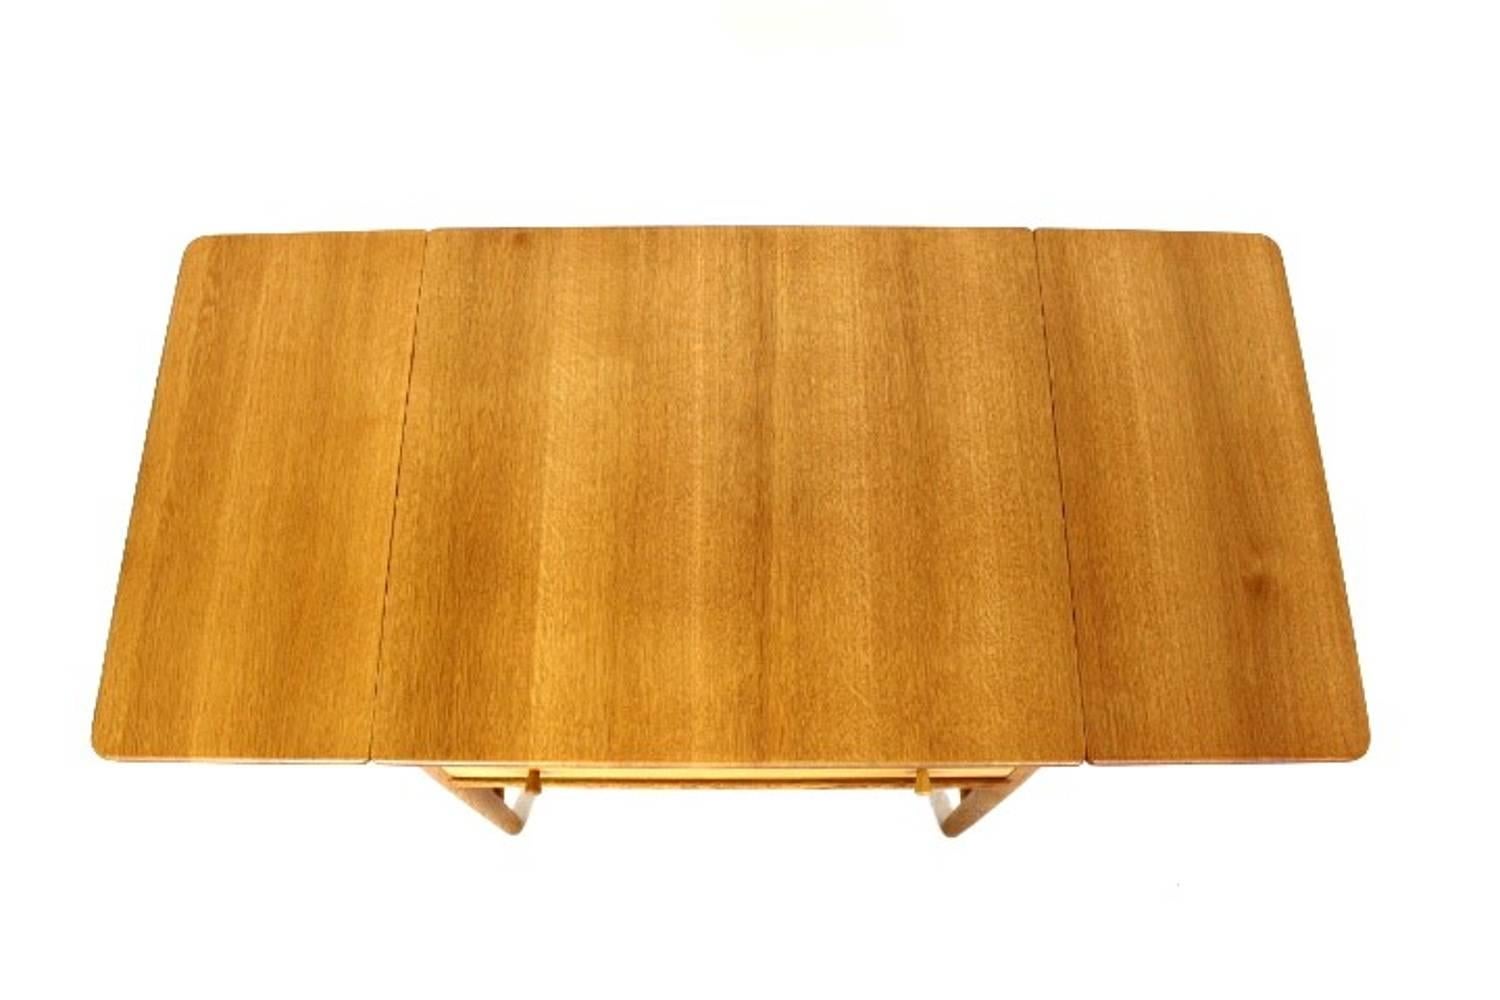 Scandinavian Modern Sewing Table in Solid Oak by Hans J. Wegner, 1959 for Andreas Tuck, Model AT-33